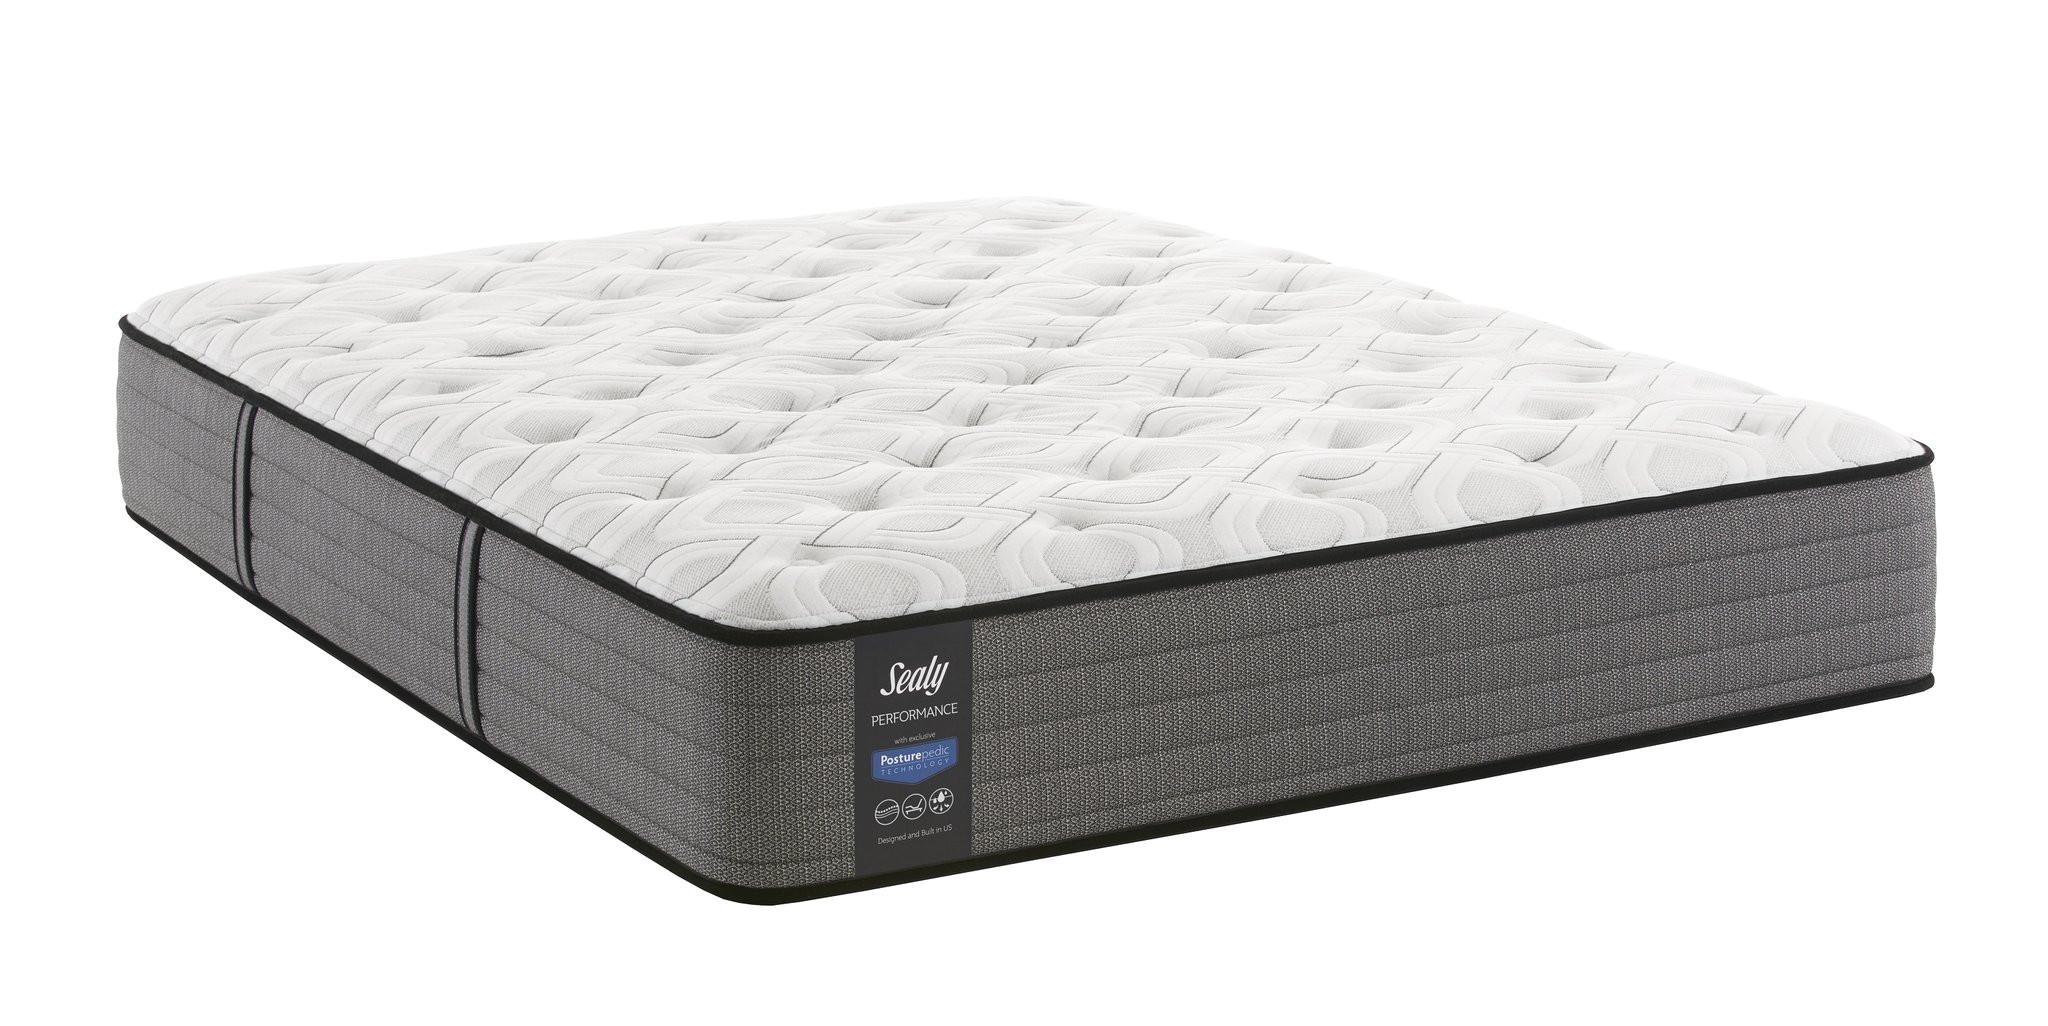 sealy rio cushion firm mattress review